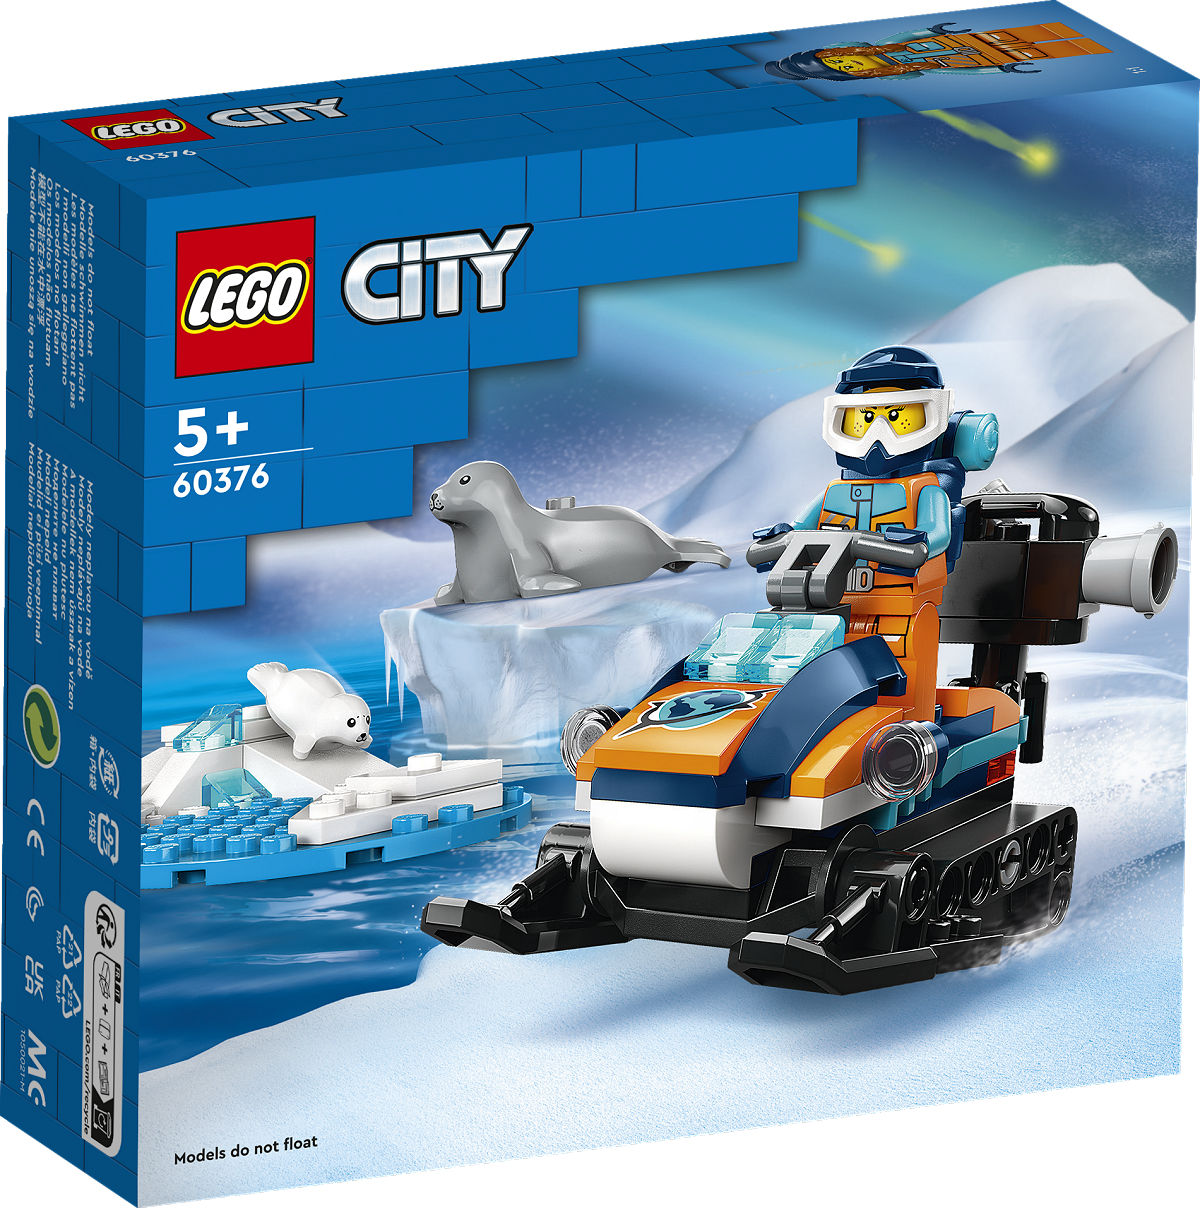 LEGO CITY 60376 SNEEUWSCOOTER - 5702017416366 - 531946